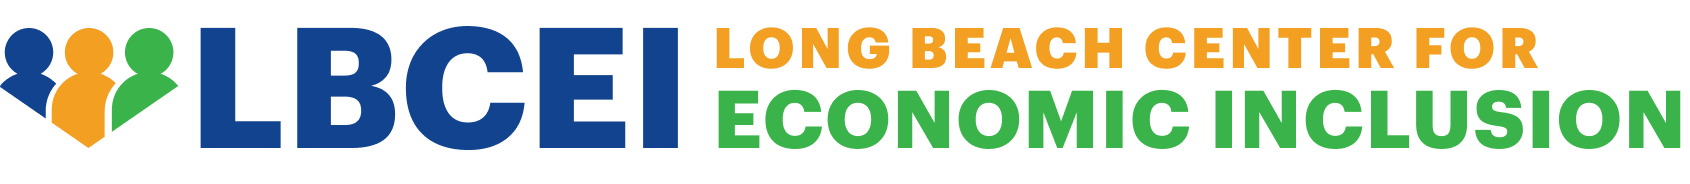 Long Beach Center for Economic Inclusion Logo